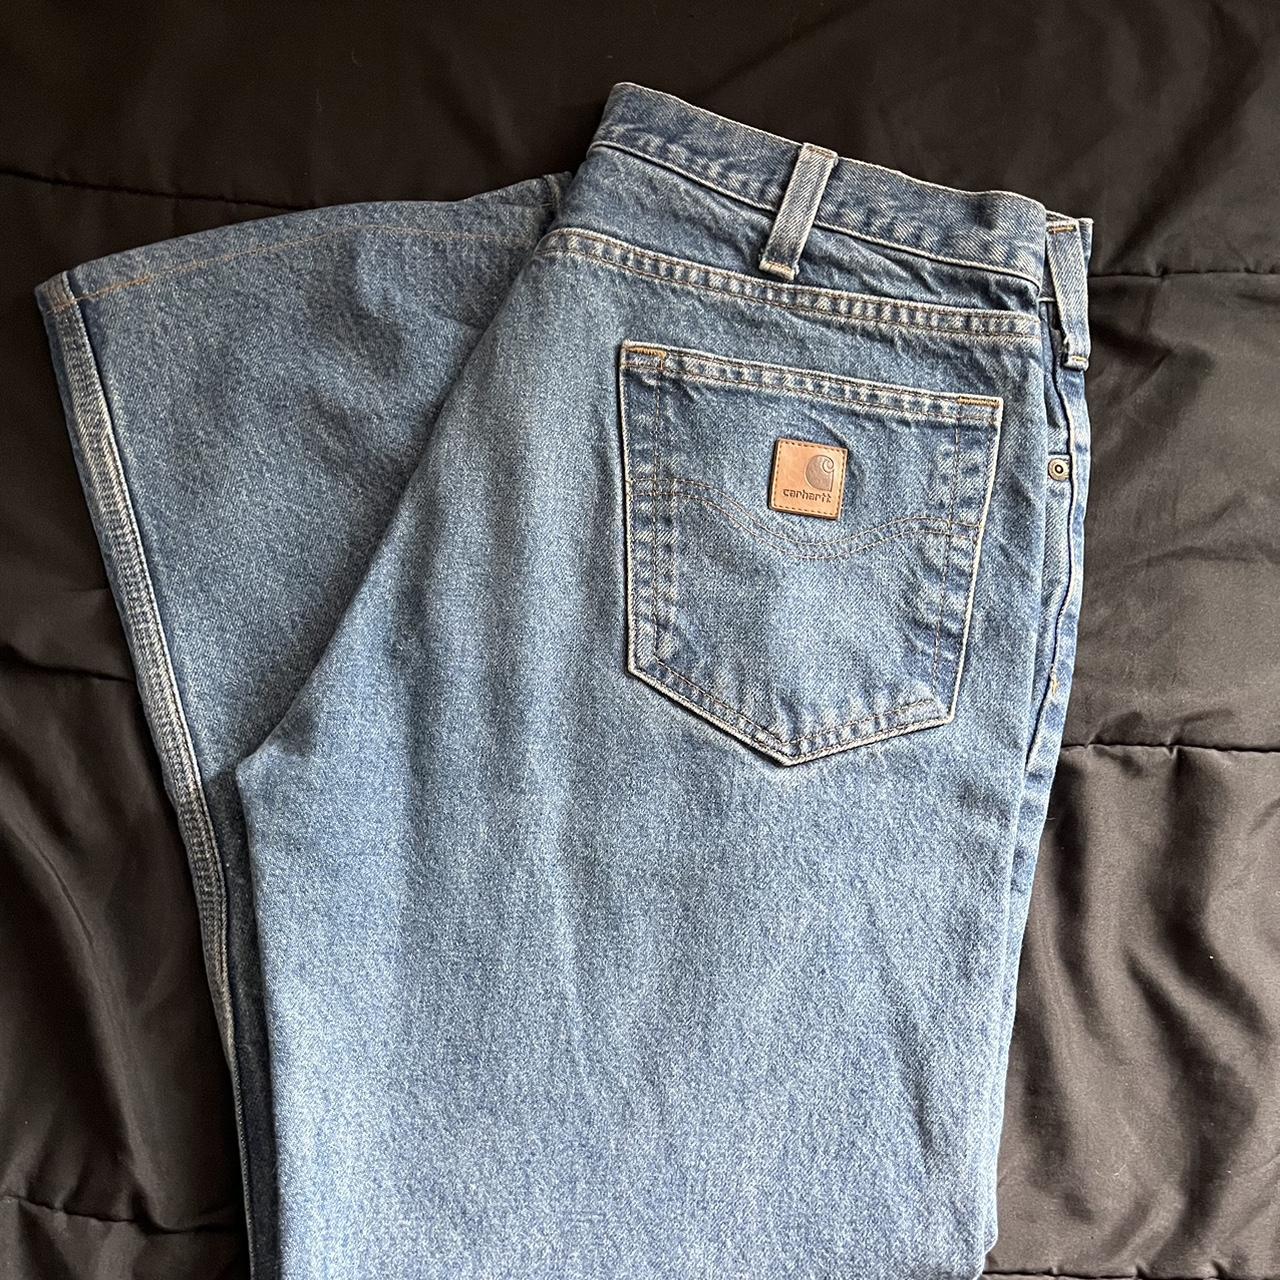 Carhartt Light Blue Vintage Jeans. Bought off a... - Depop